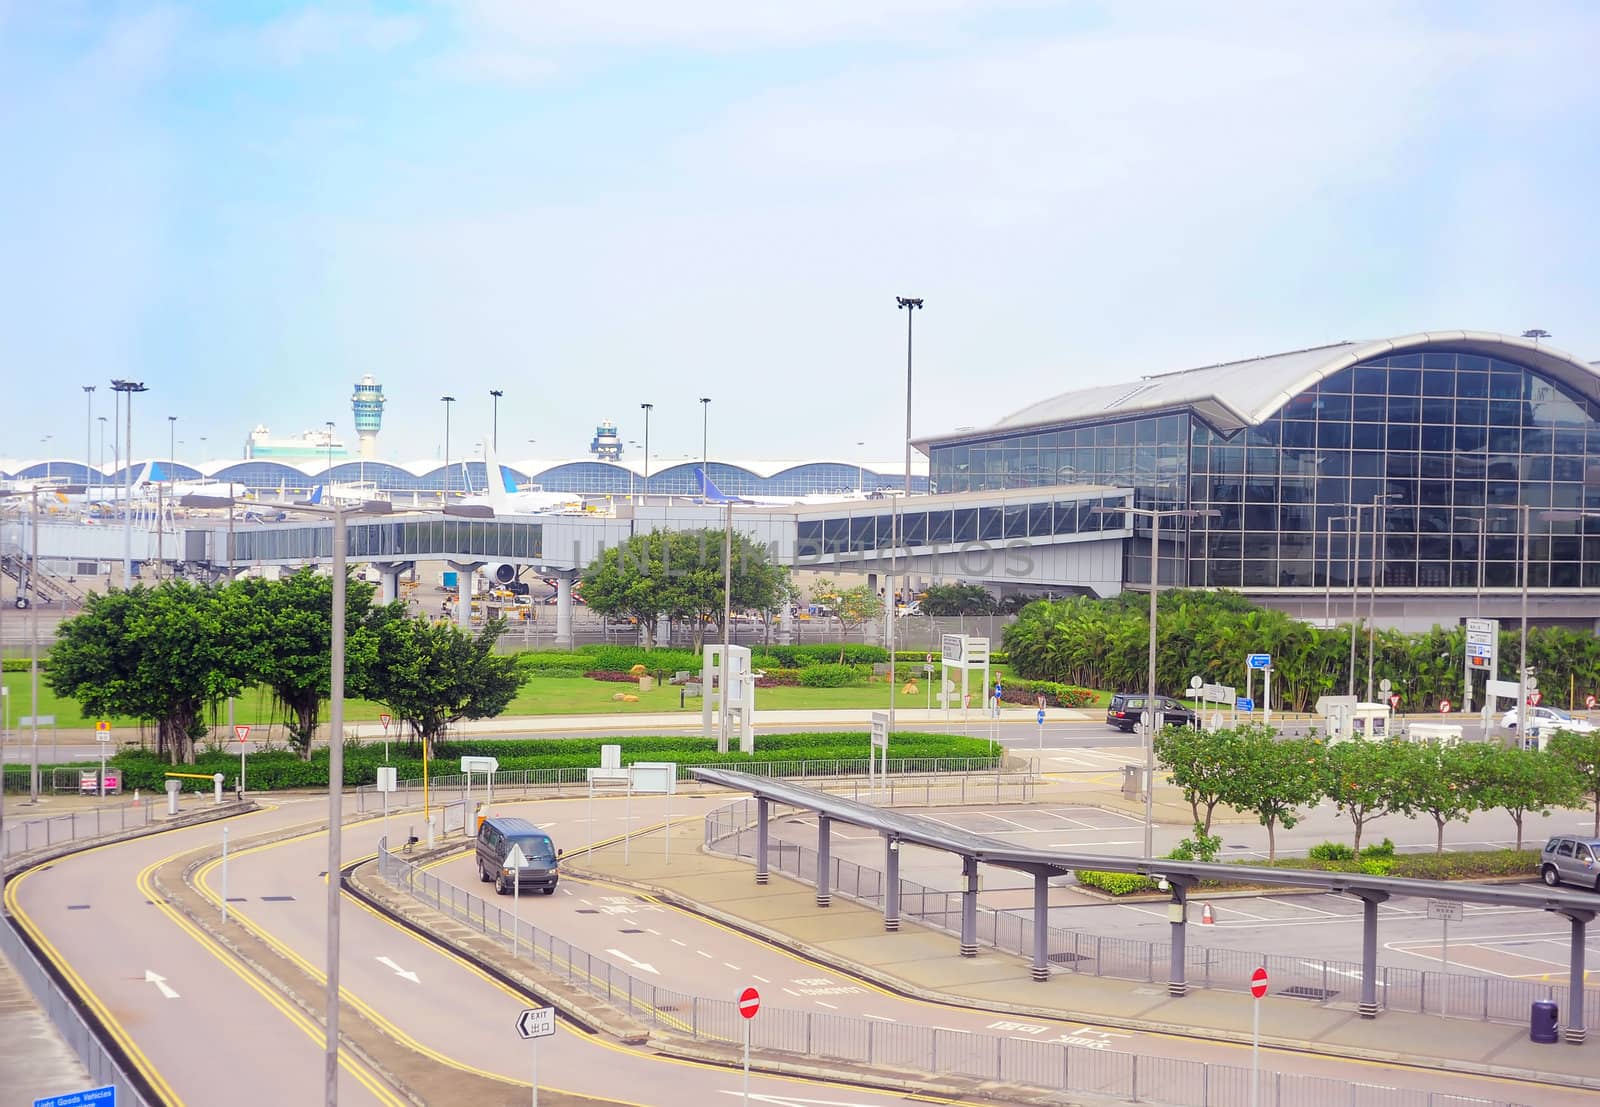 View of Hong Kong International Airport